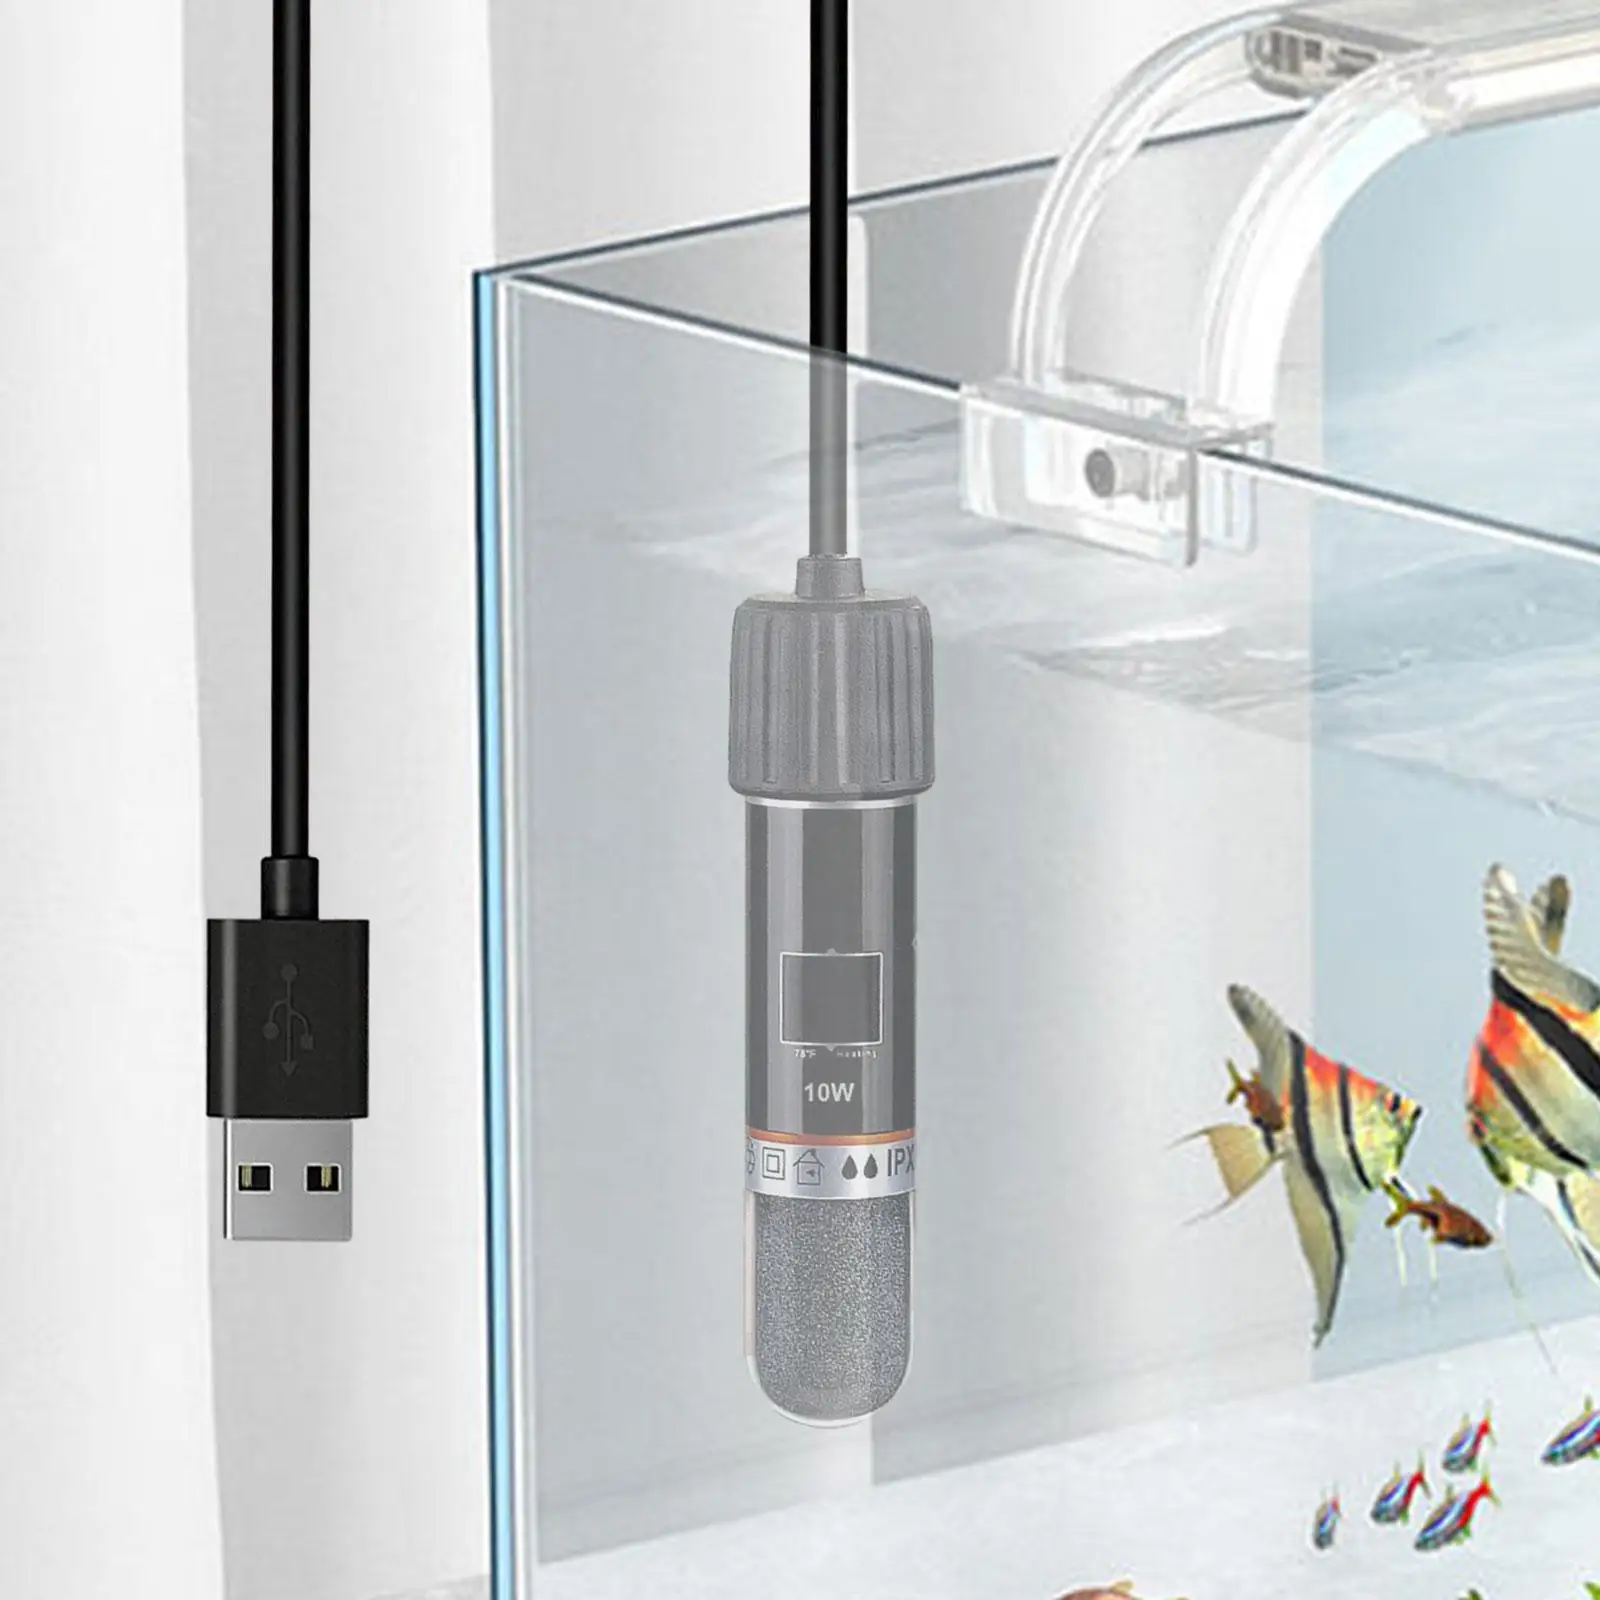 Small Aquarium Heater, Aquarium Heater, 5V Automatic Low Water Protection, Pet